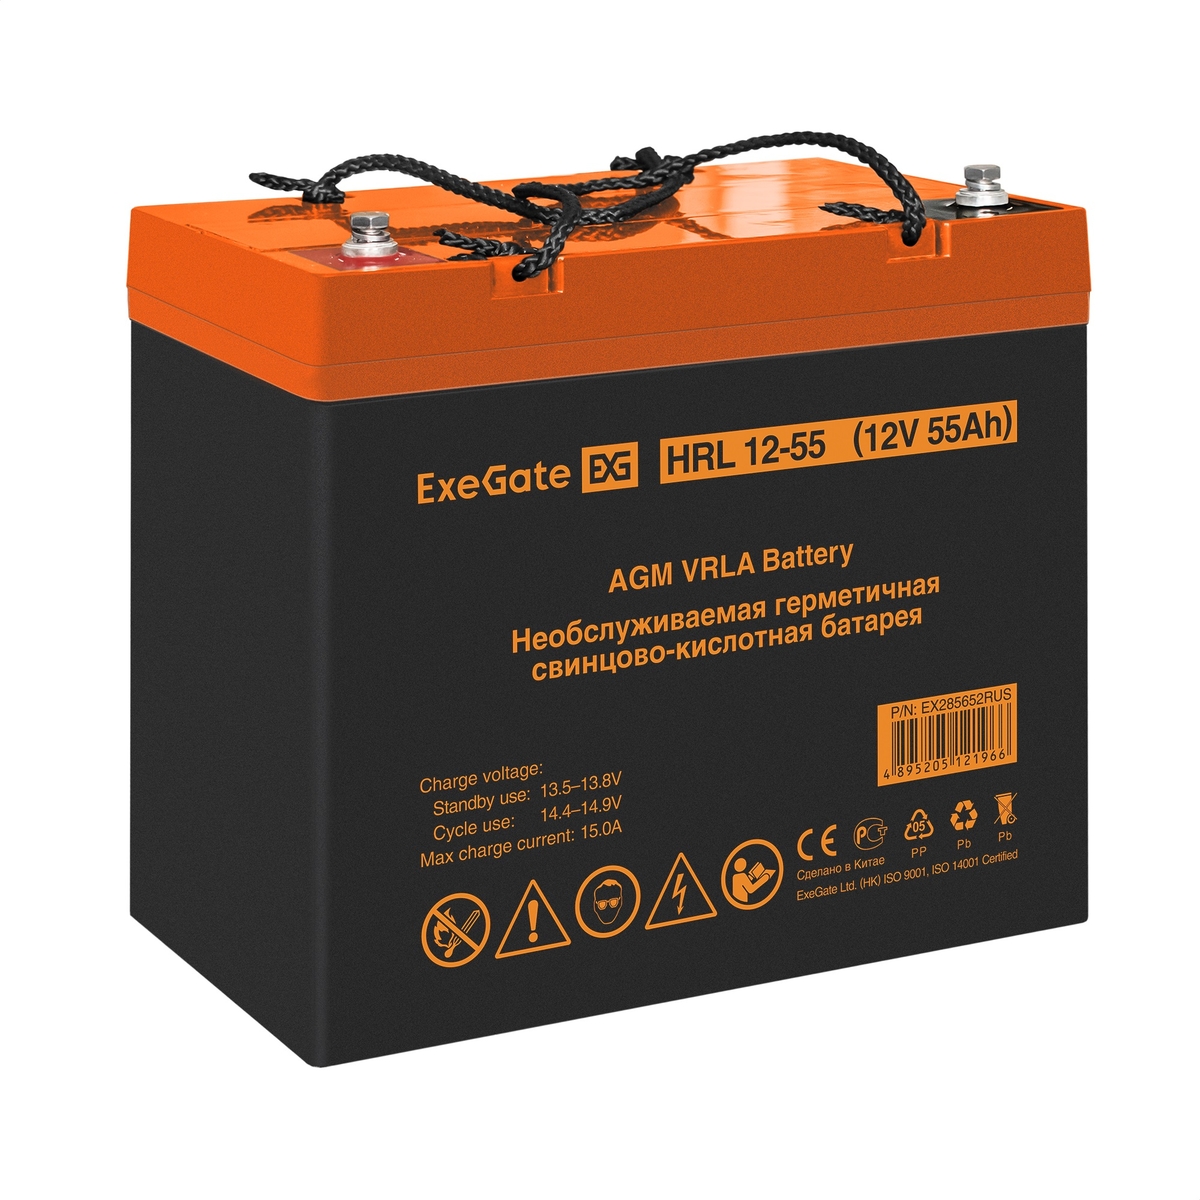 UPS set EX296004 + battery 55Ah EX285652 4 piece